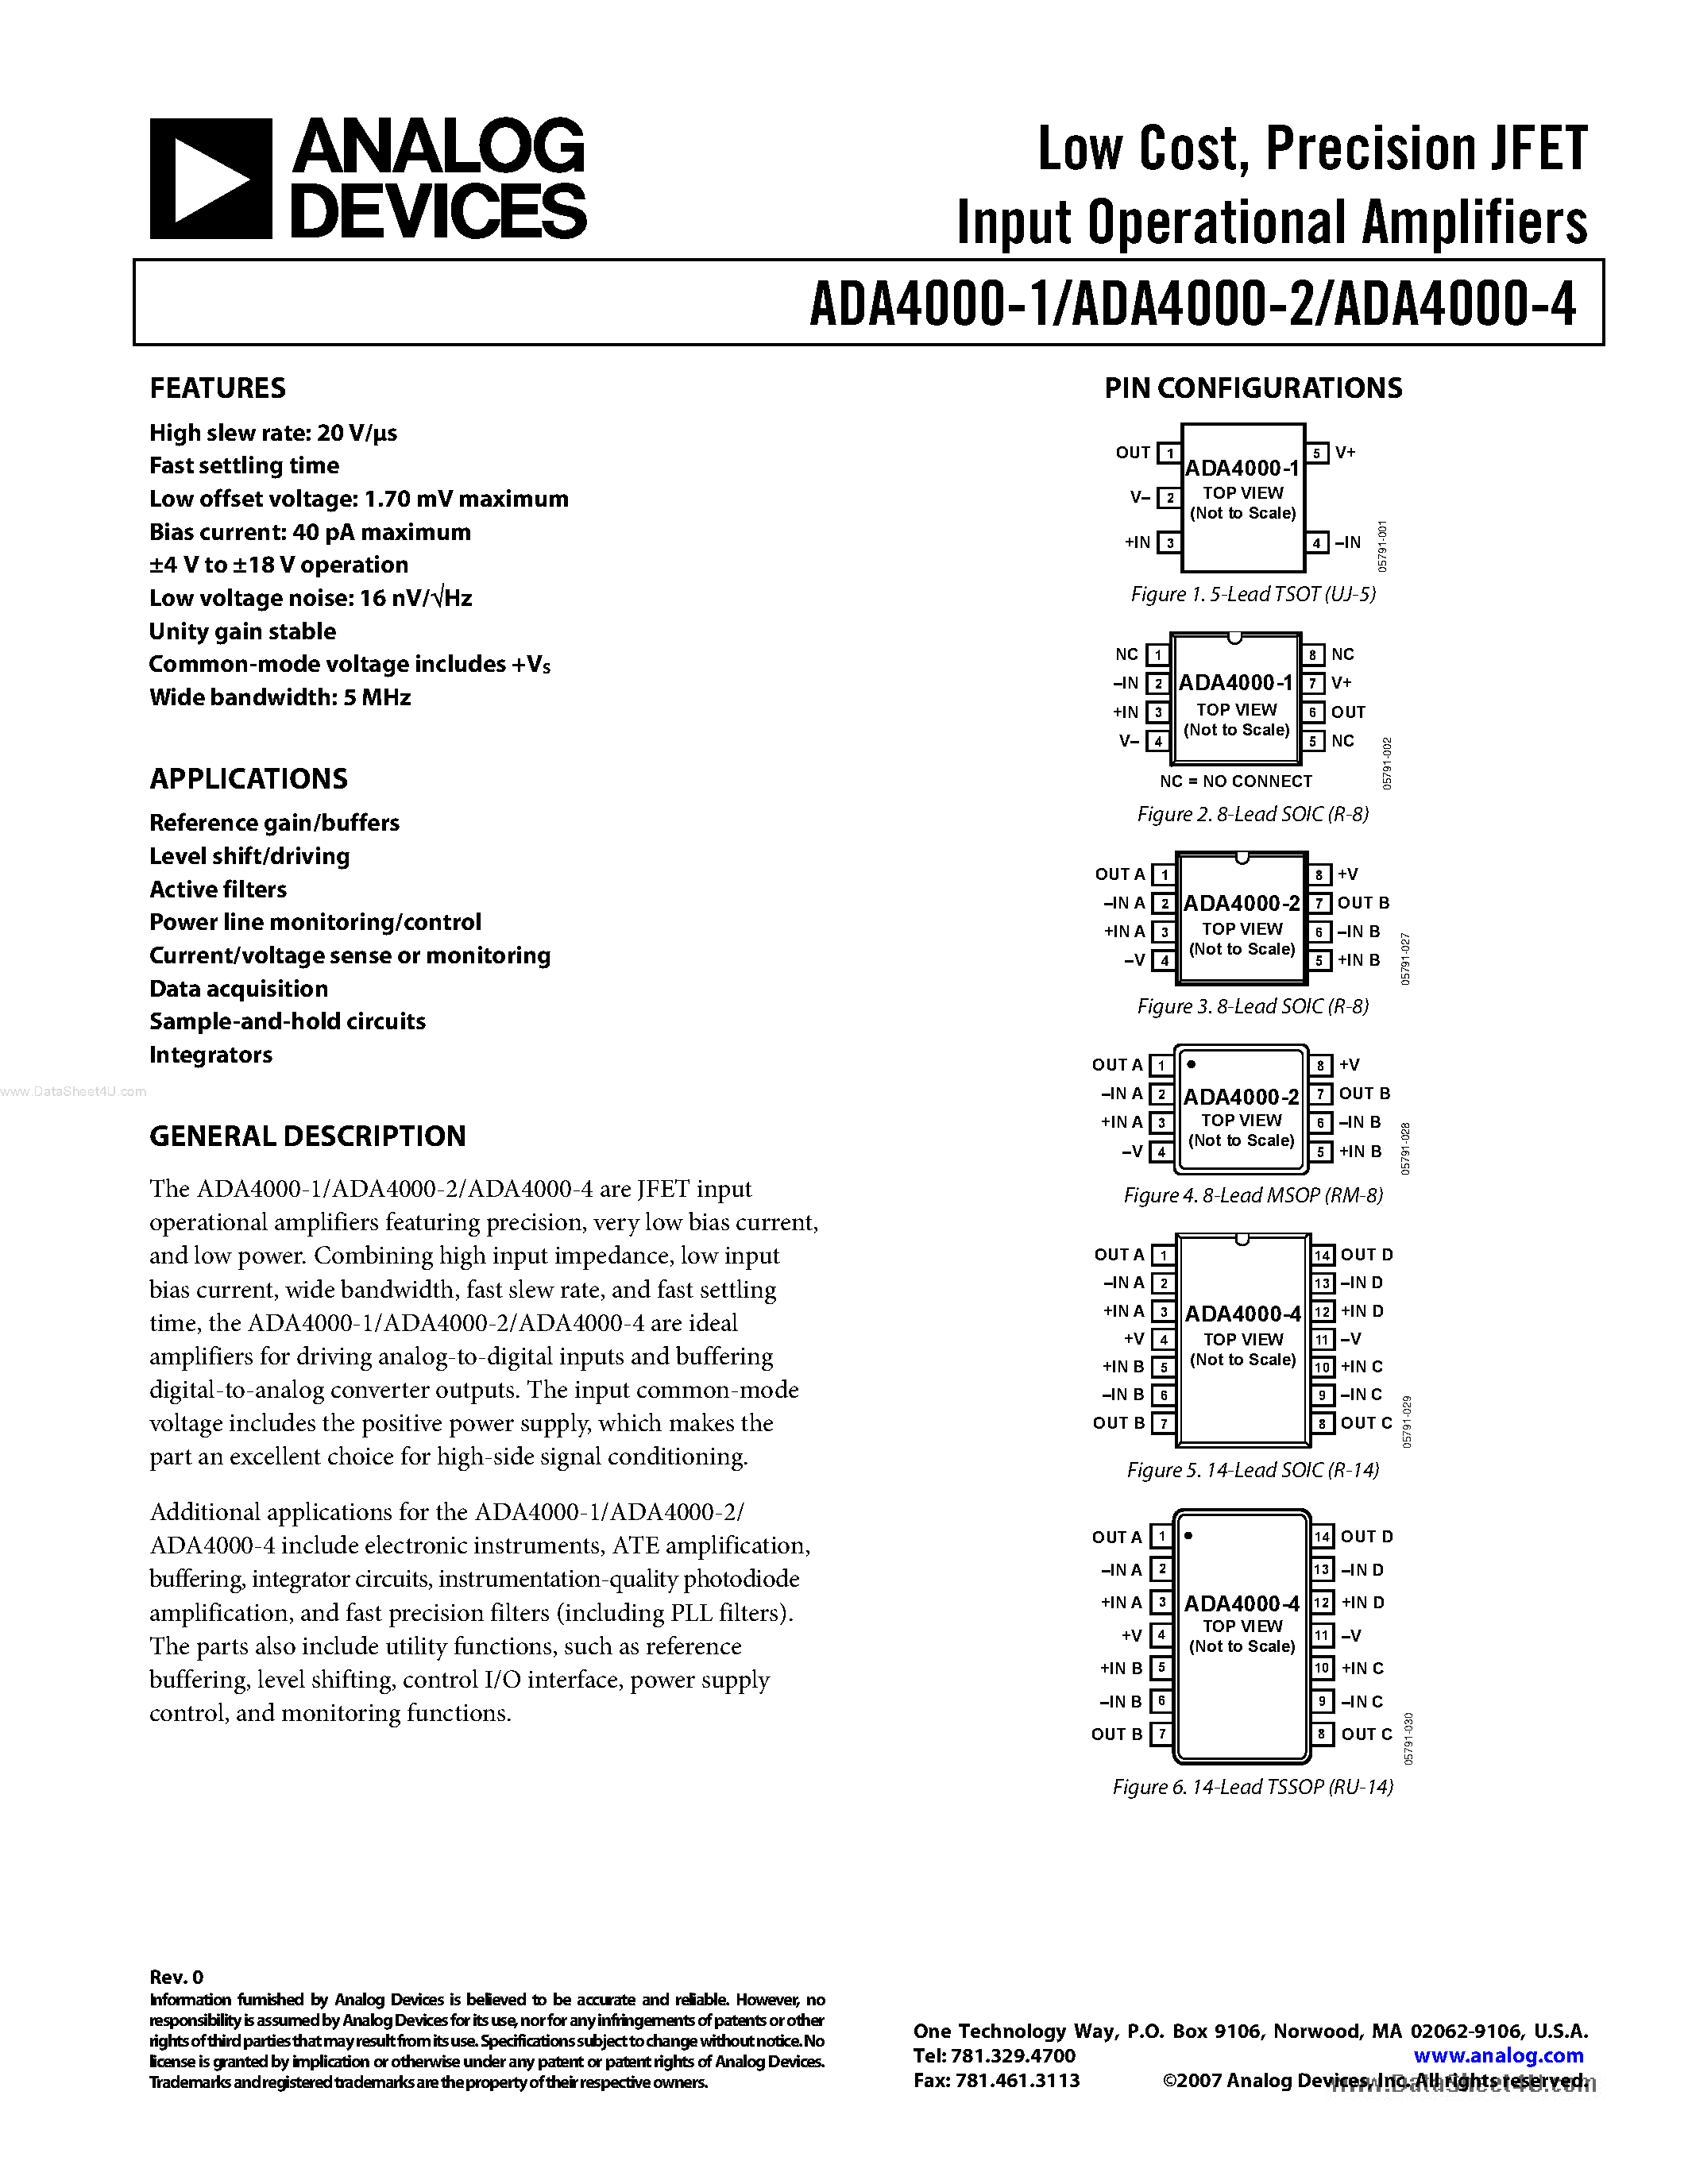 Даташит ADA4000-1-(ADA4000-1/-2/-4) Low Cost Precision JFET Input Operational Amplifiers страница 1